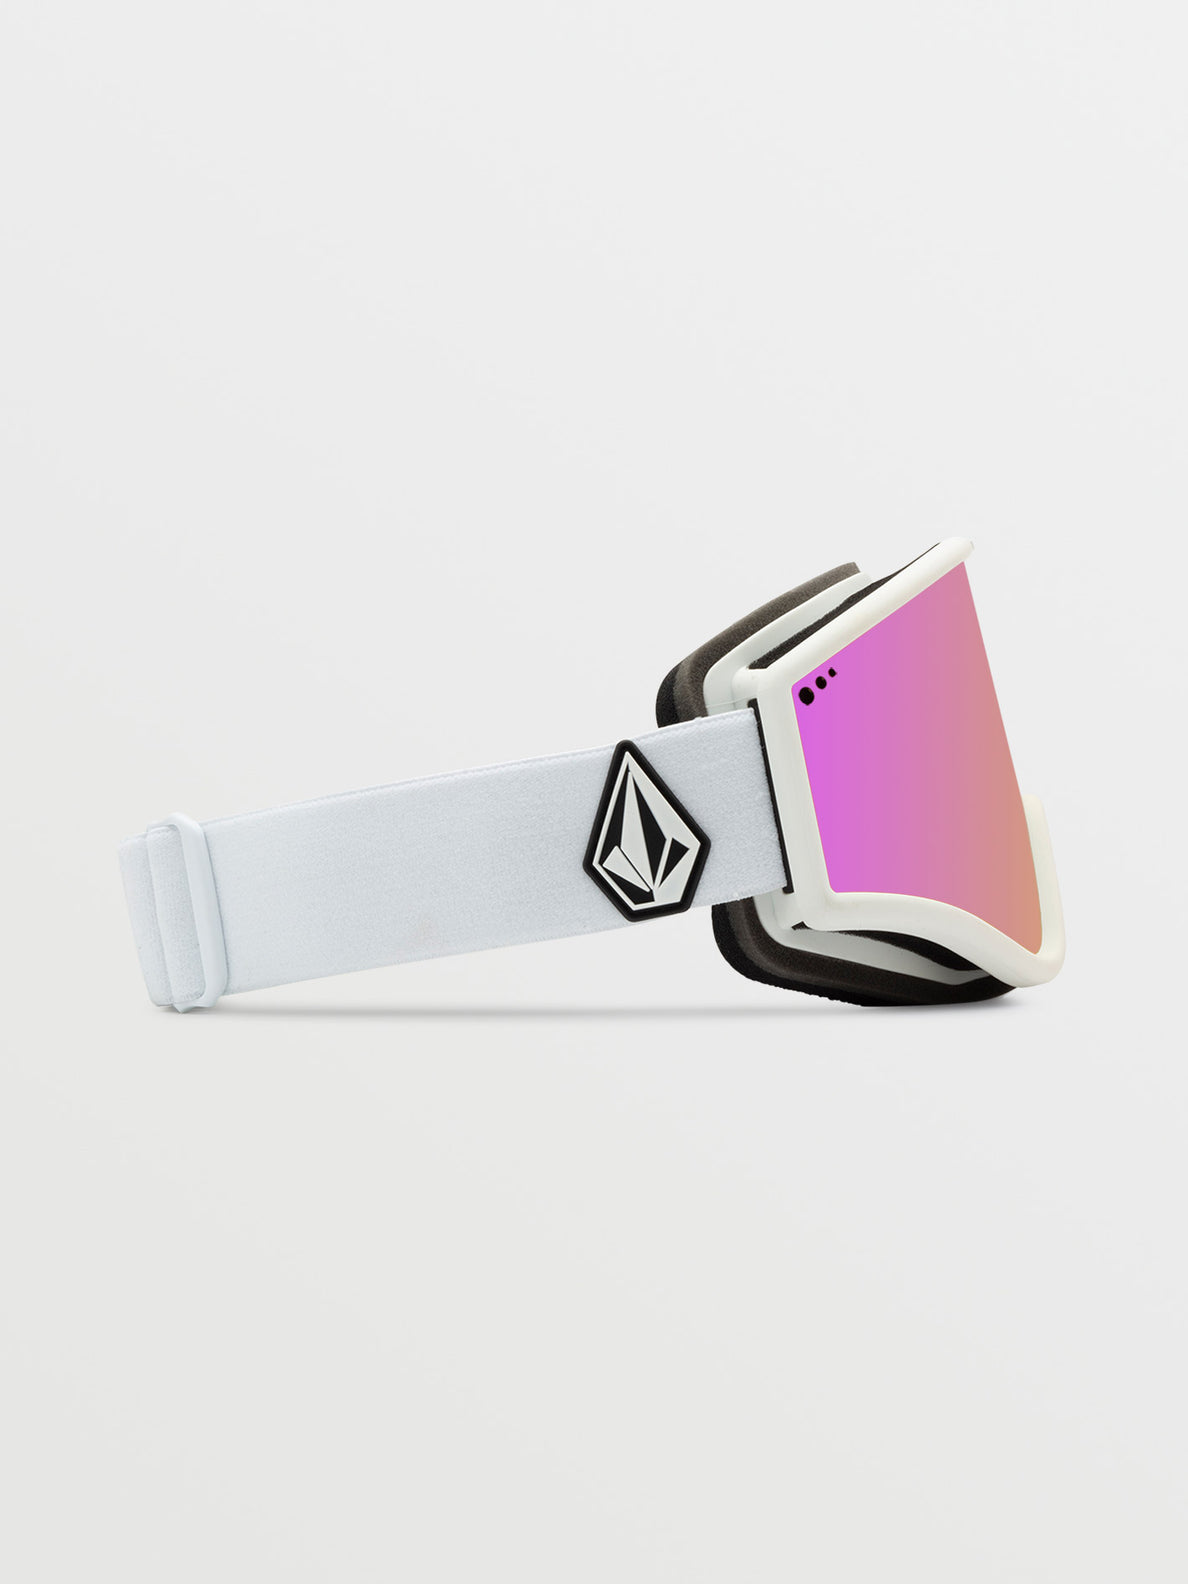 Yae  Goggle - Matte White / Pink Chrome  +BL